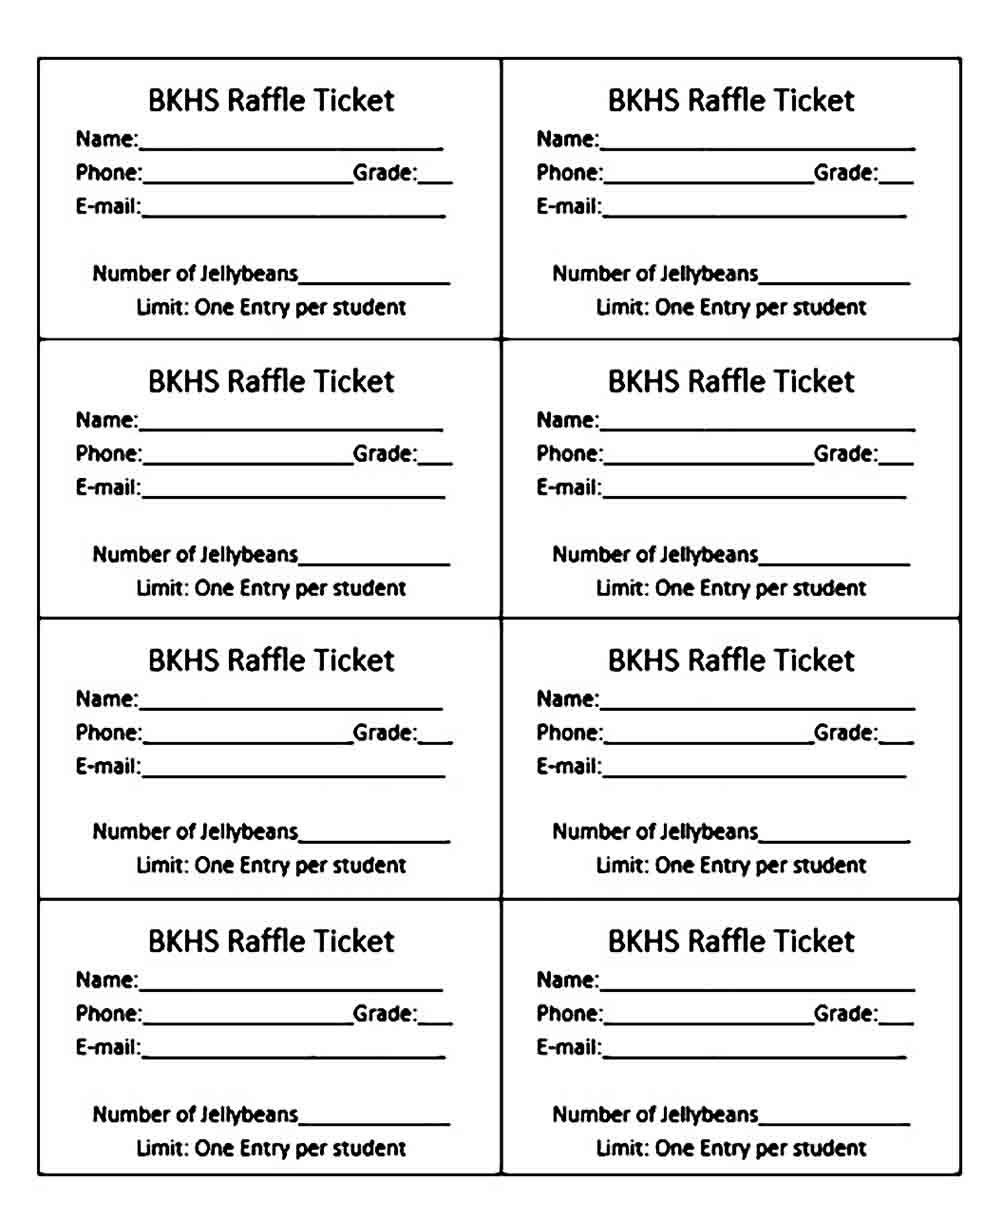 bkhs raffle ticket templates